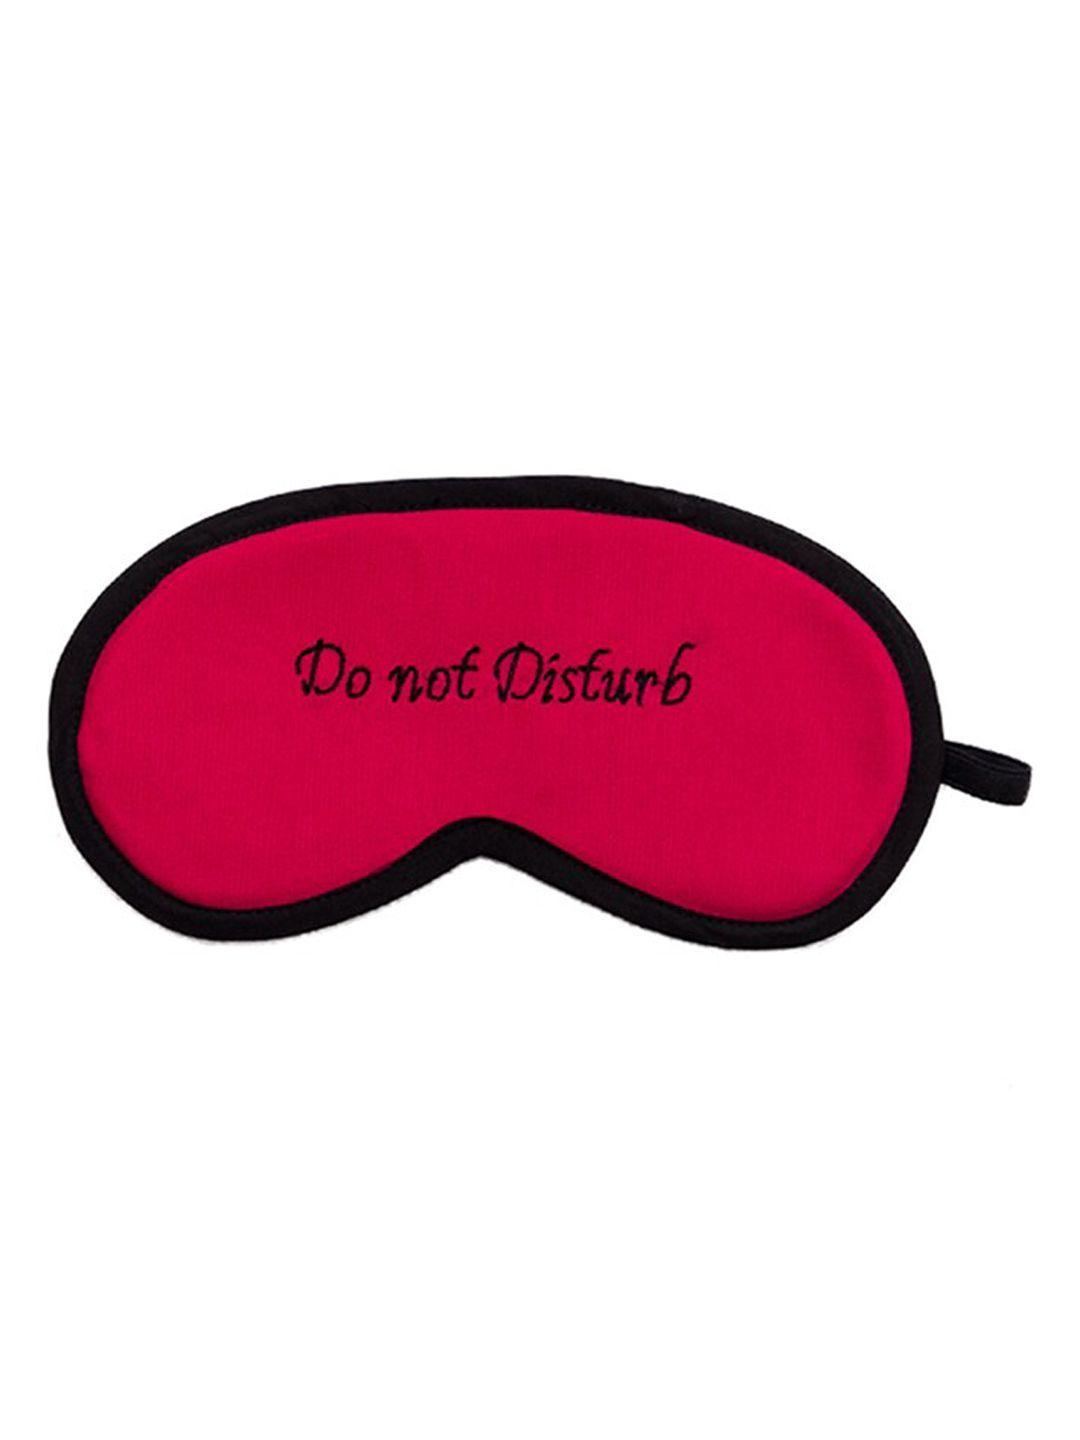 bandbox unisex pink & black do not disturb embroidered cotton eye mask